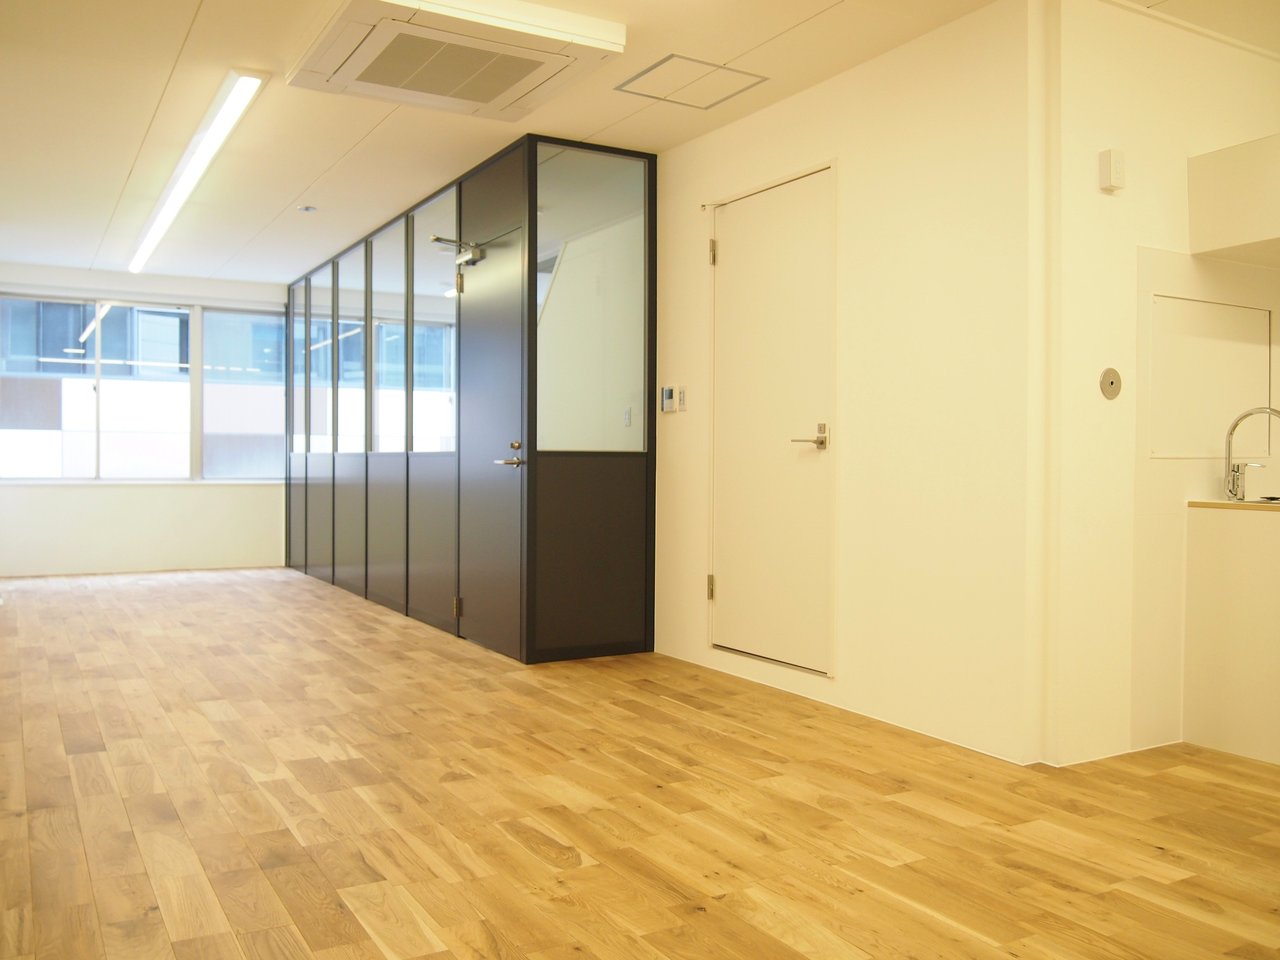 2F〜4Fはそれぞれワンフロア占有のオフィス空間。床はオーク材。やっぱり、無垢のフローリングっていいなぁ（おかげさまで全てのお部屋に1番手のお客様がいらっしゃいます）